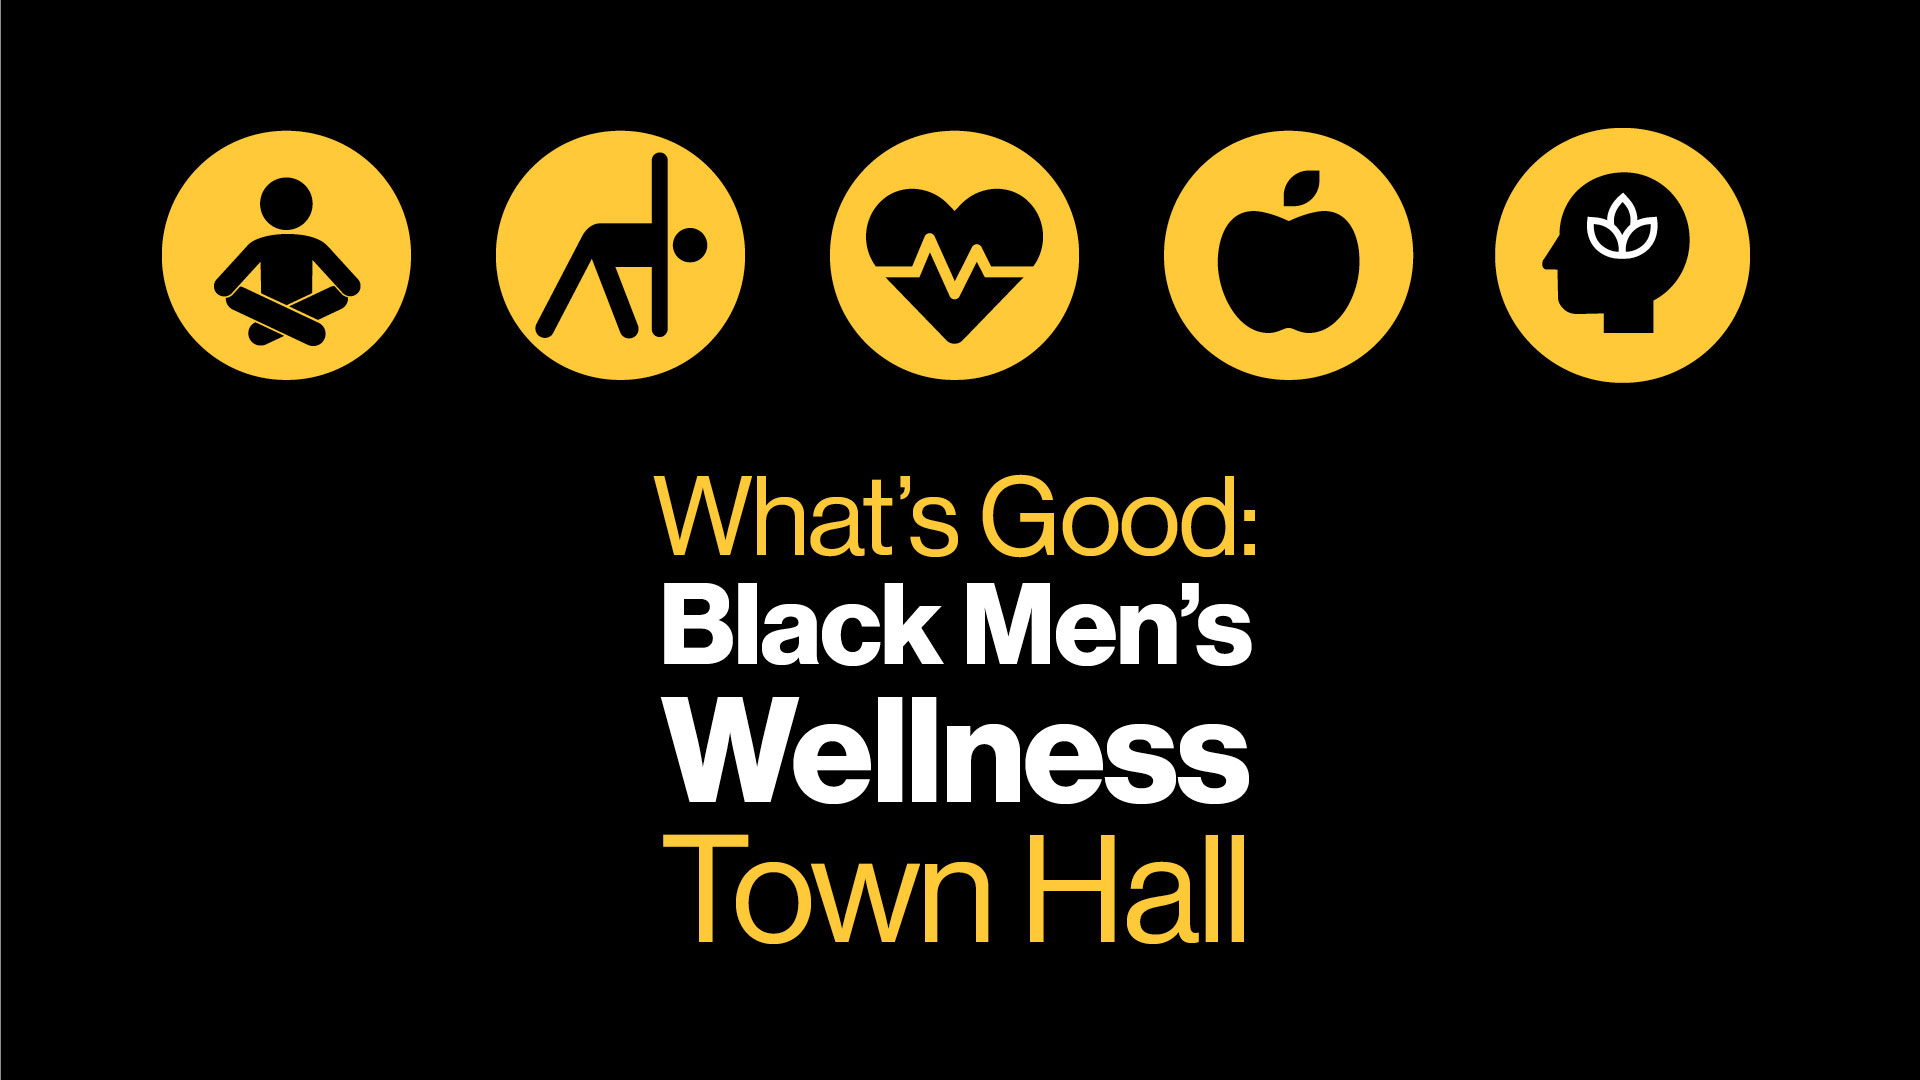 Black men's wellness town hall